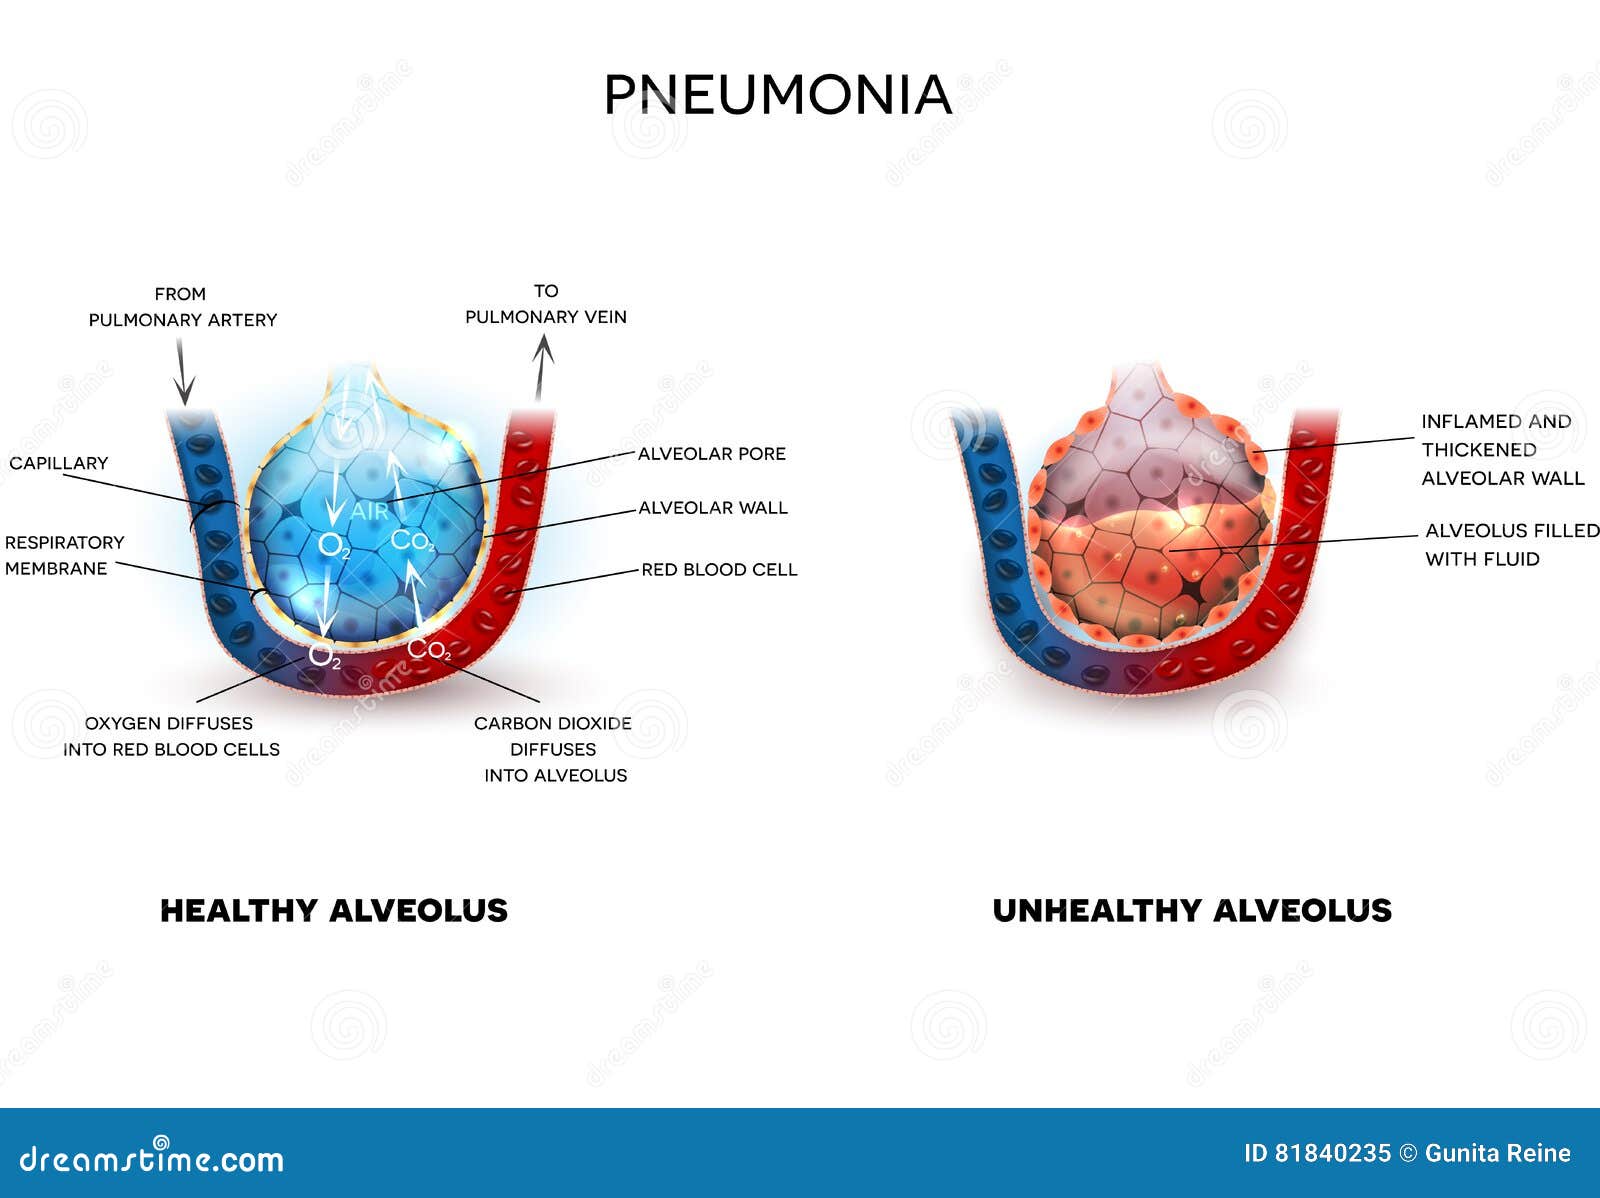 pneumonia and healthy alveoli